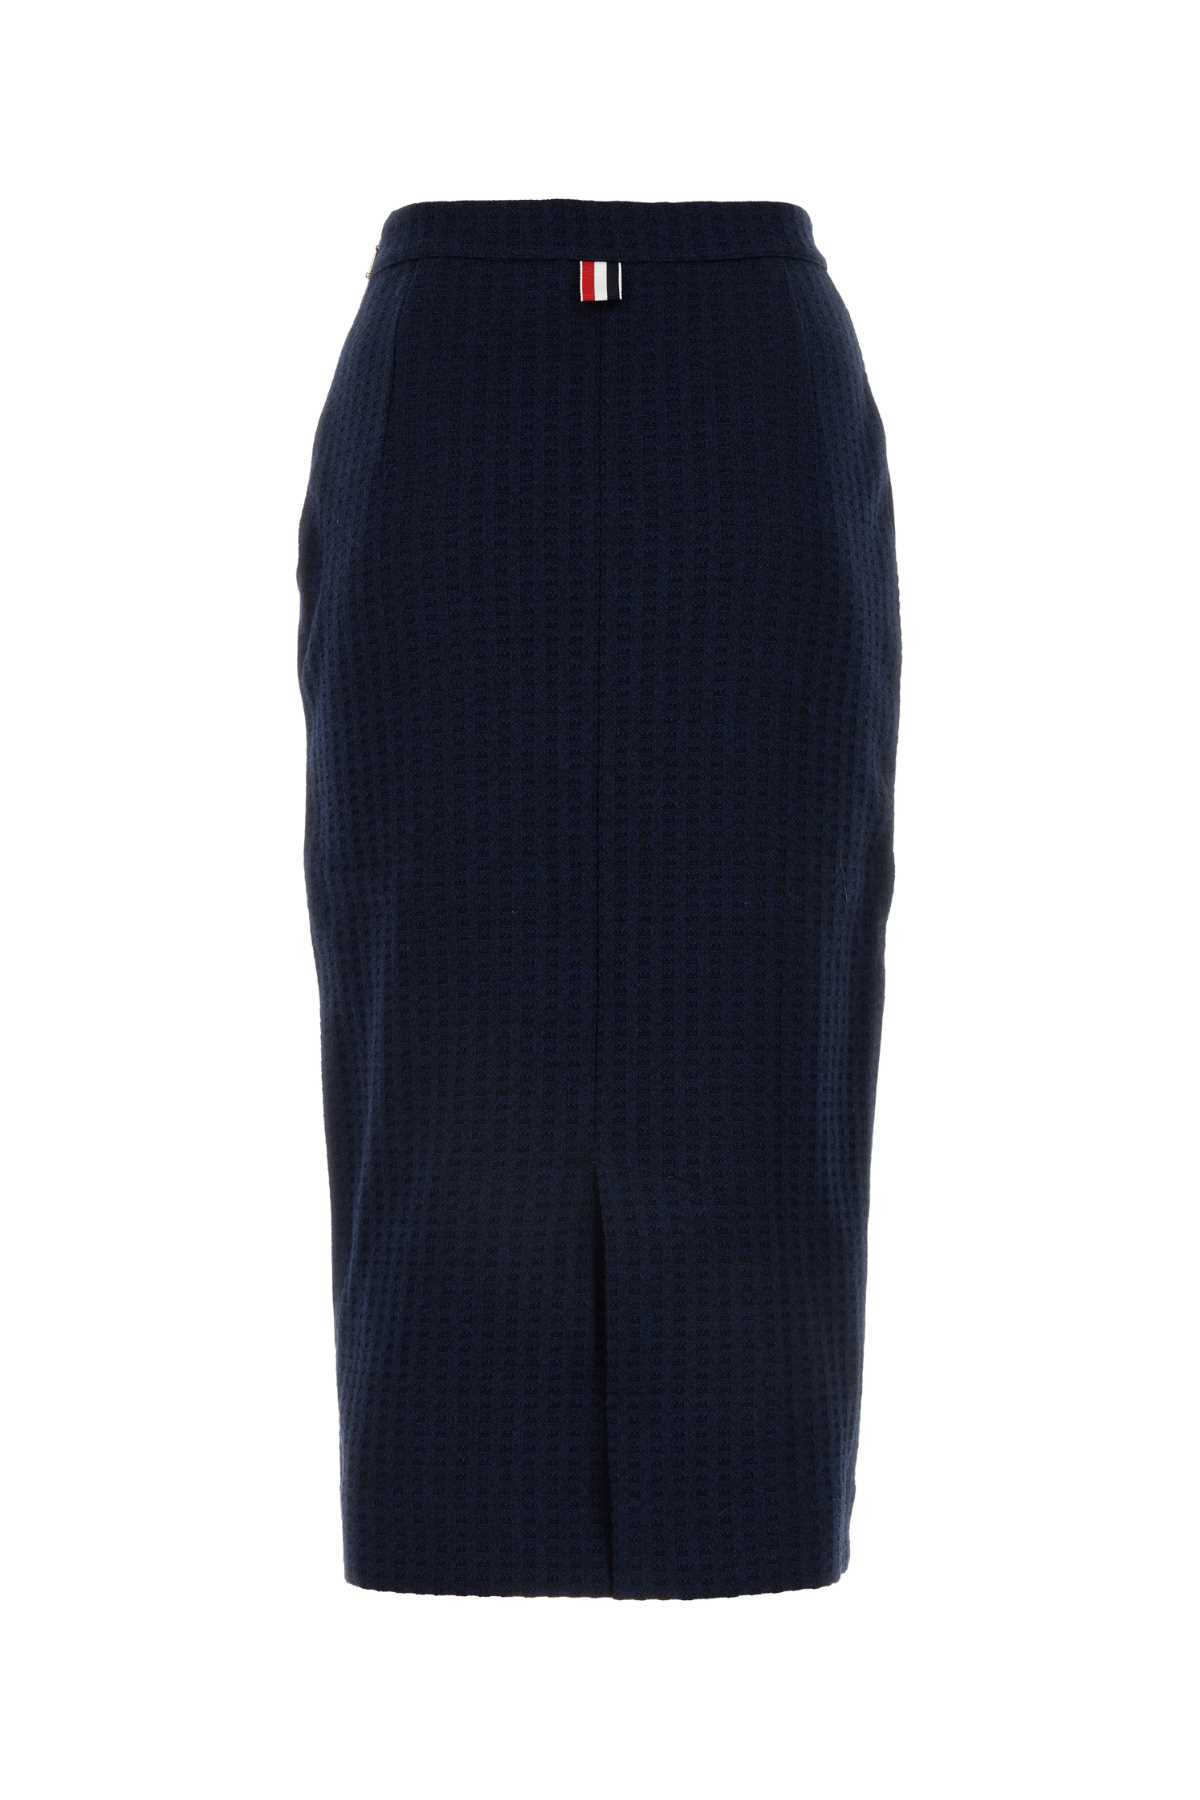 Thom Browne Melange Navy Blue Cotton Skirt